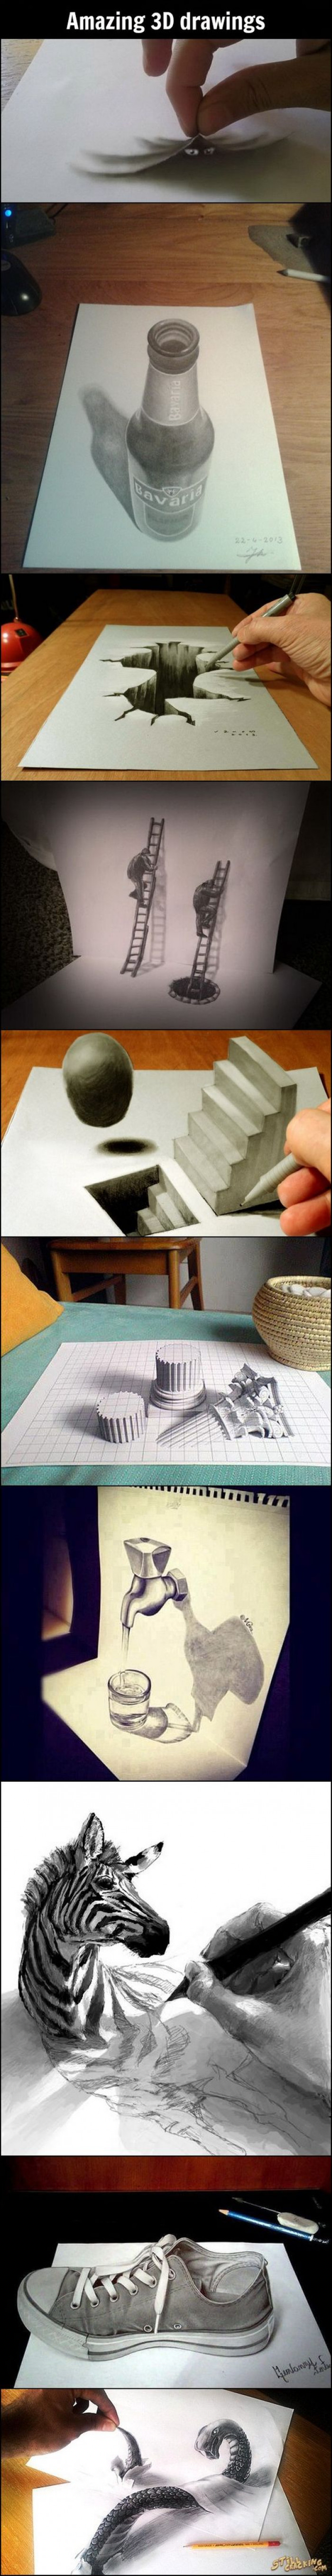 10 Cool 3D Drawings That Look Kinda Real